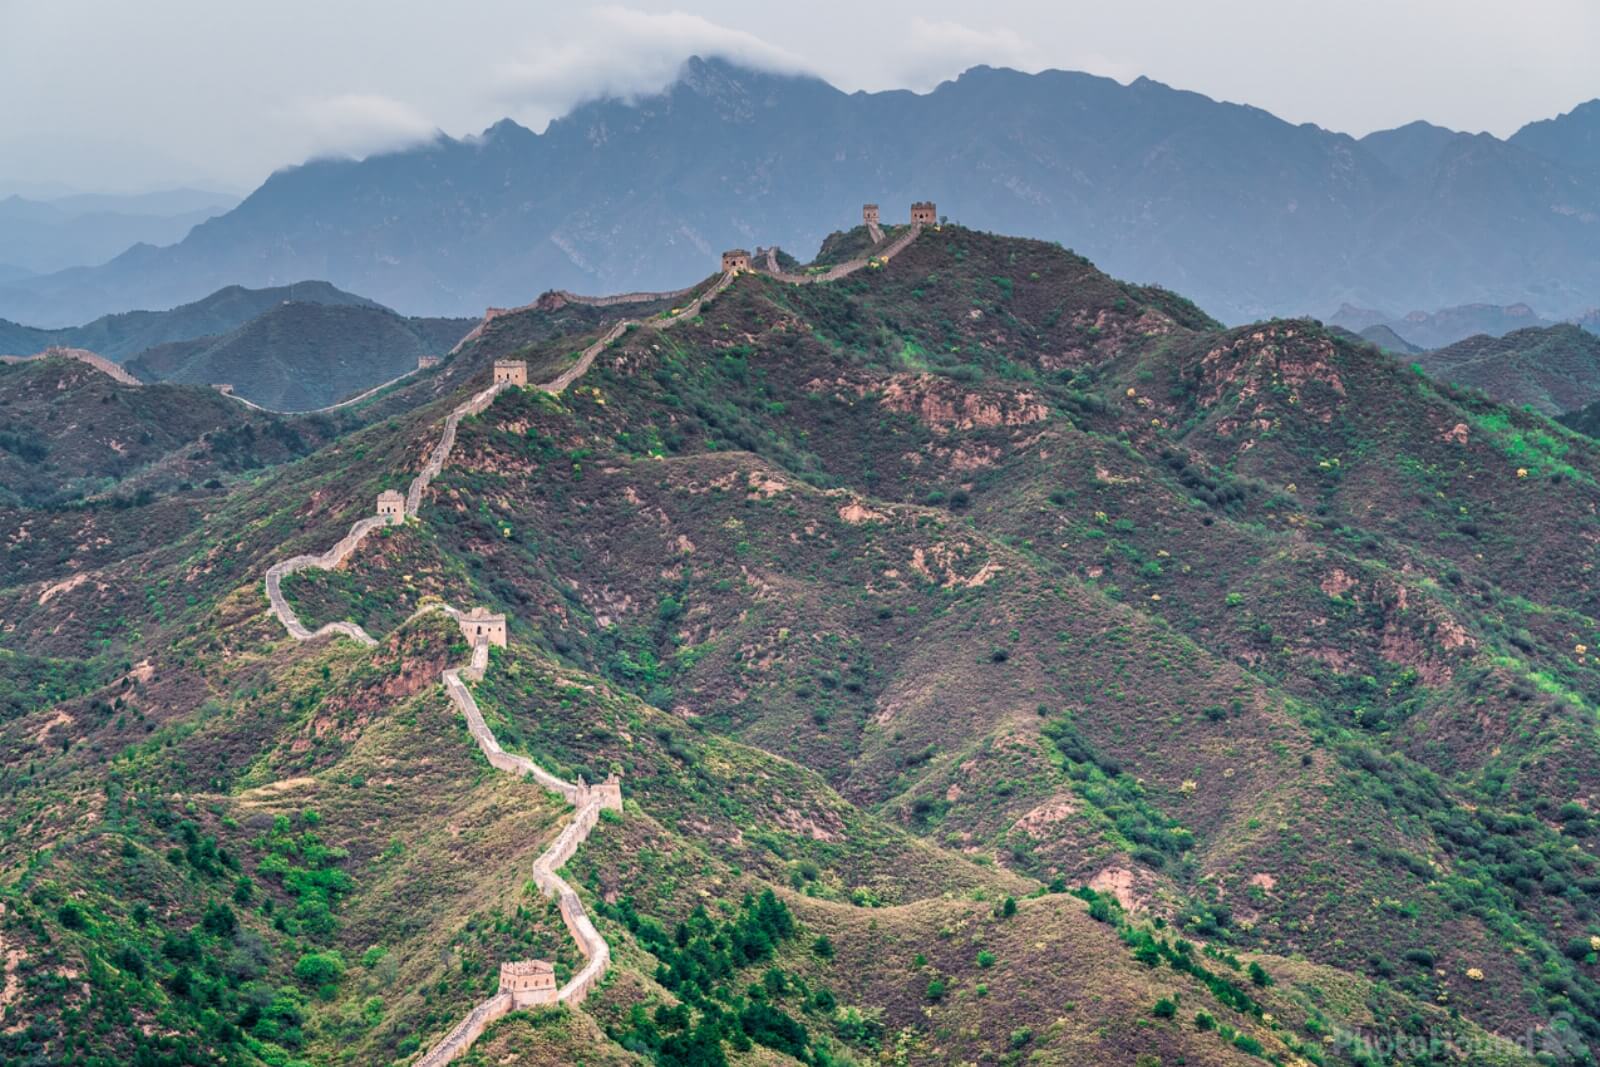 Image of The Great Wall at Simatai by James Billings.